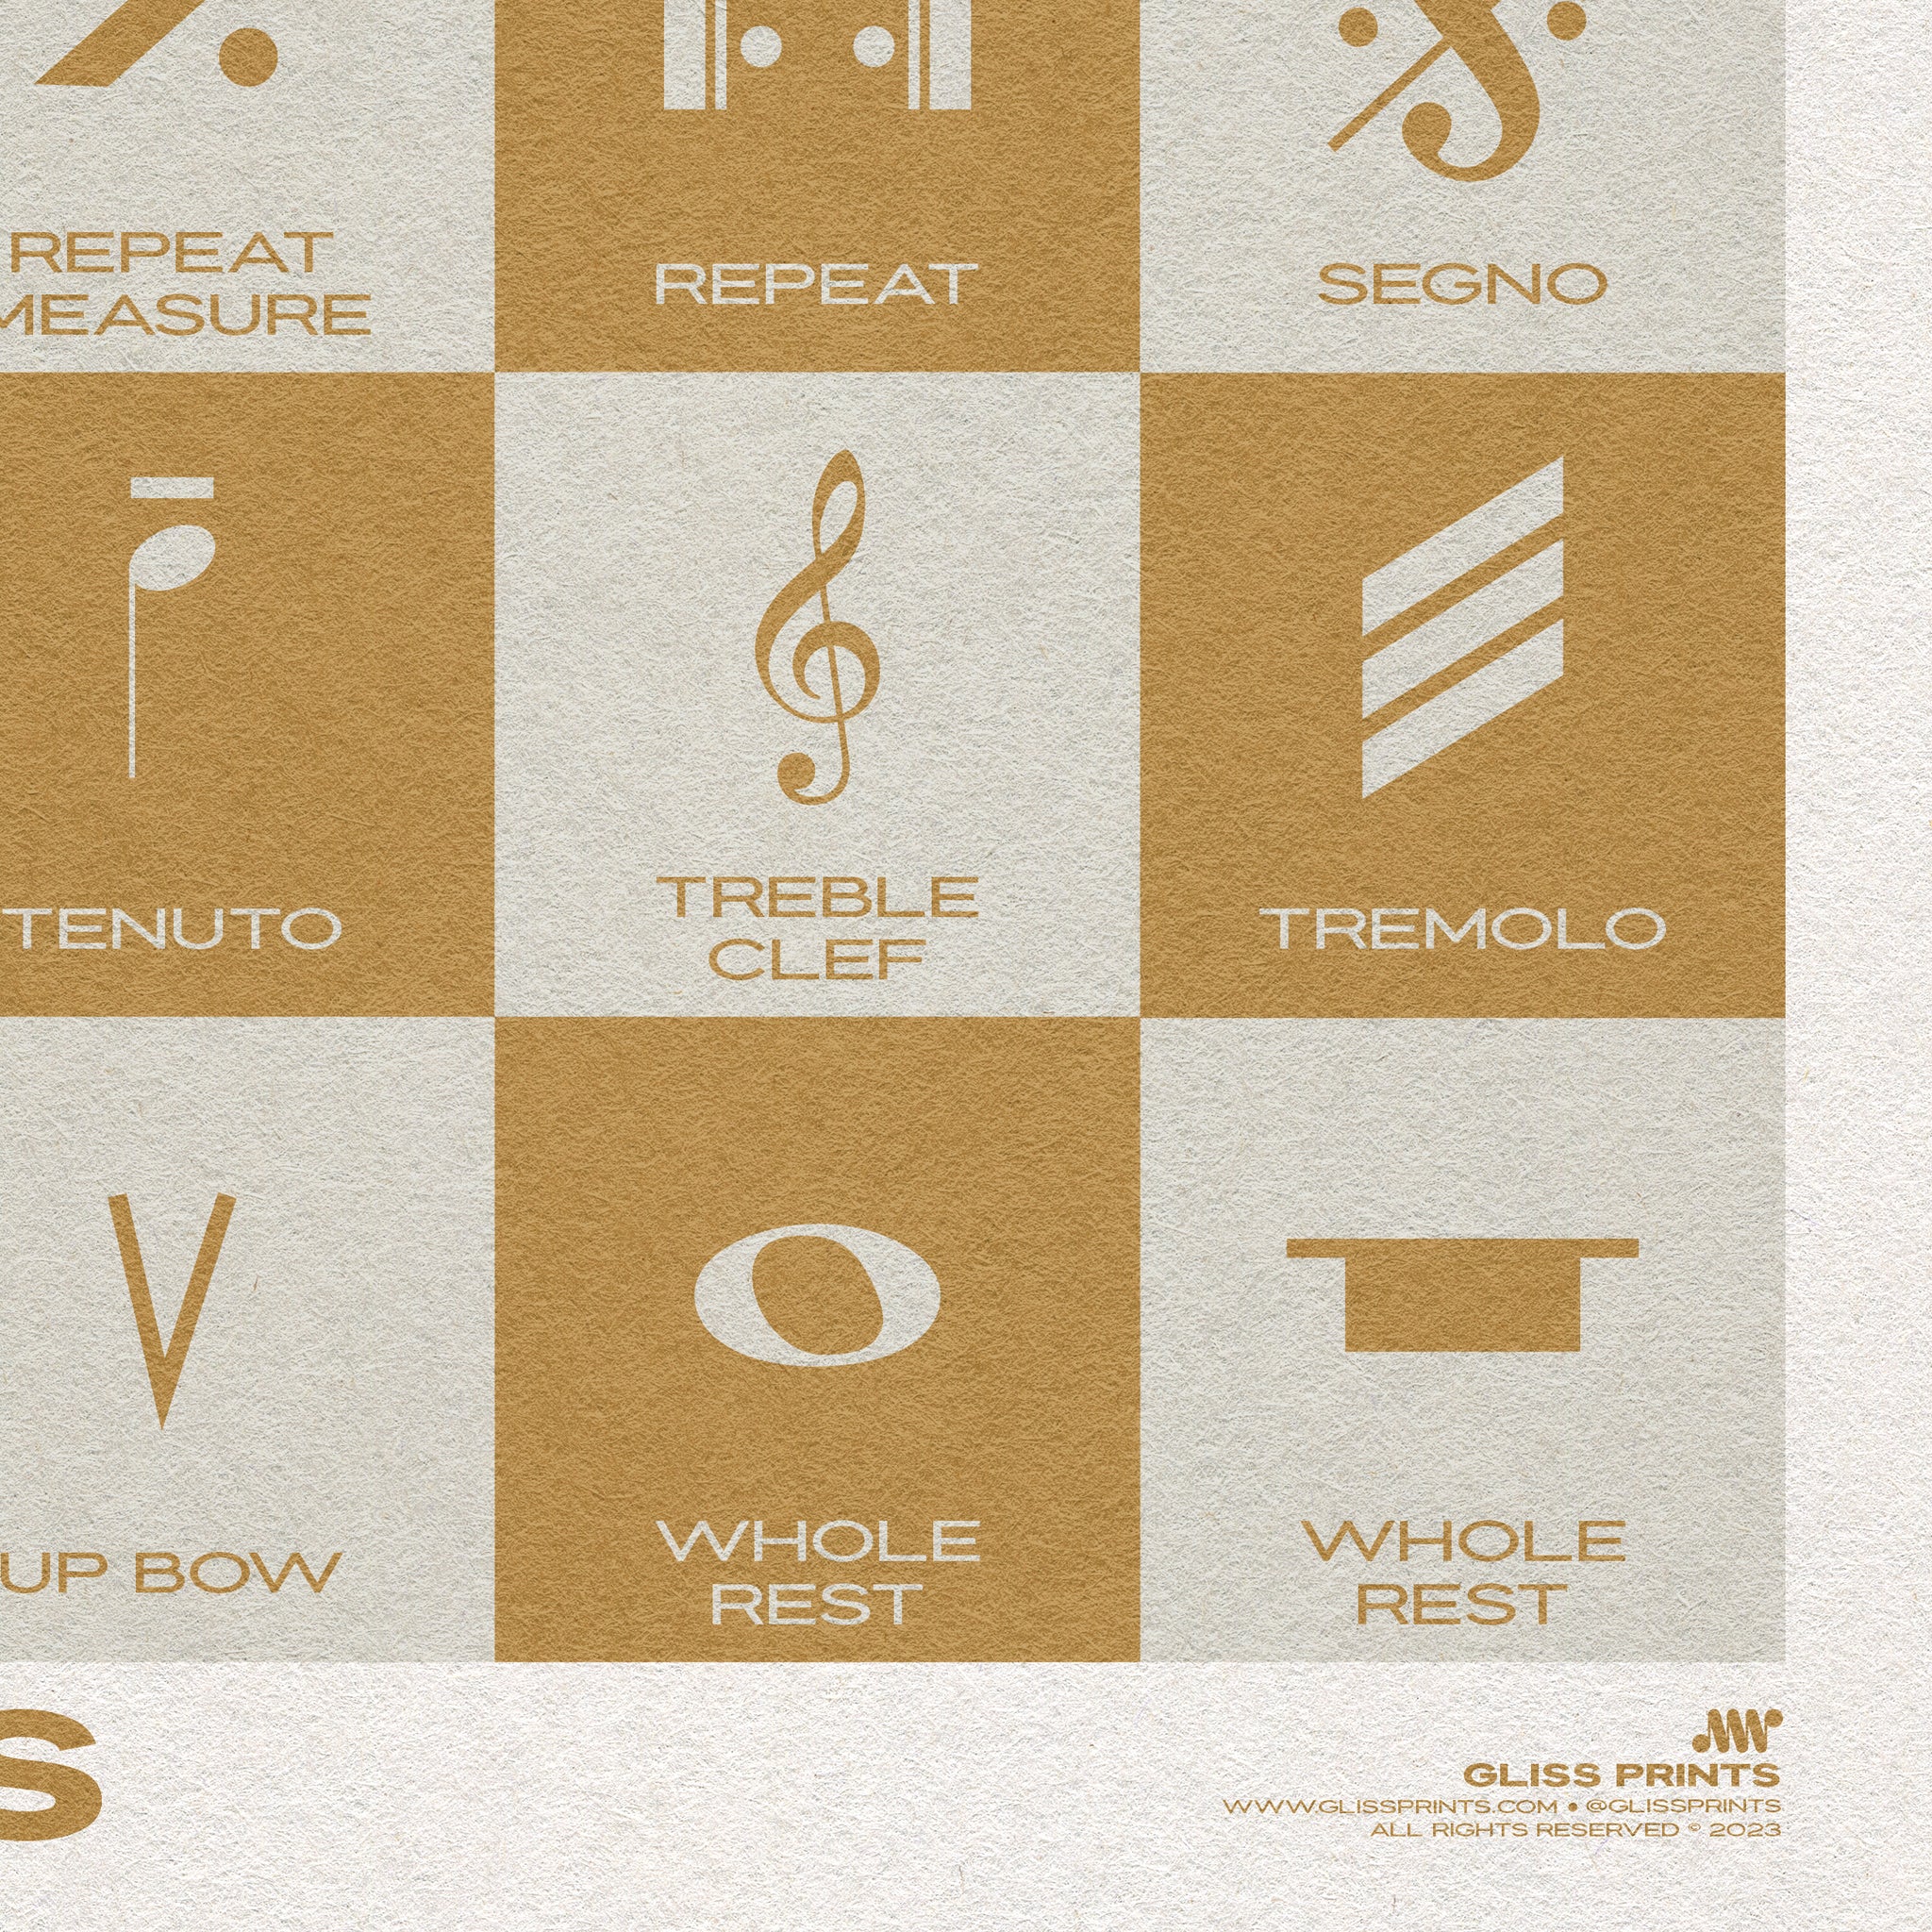 Music Symbols Checkered Design Poster, Yellow